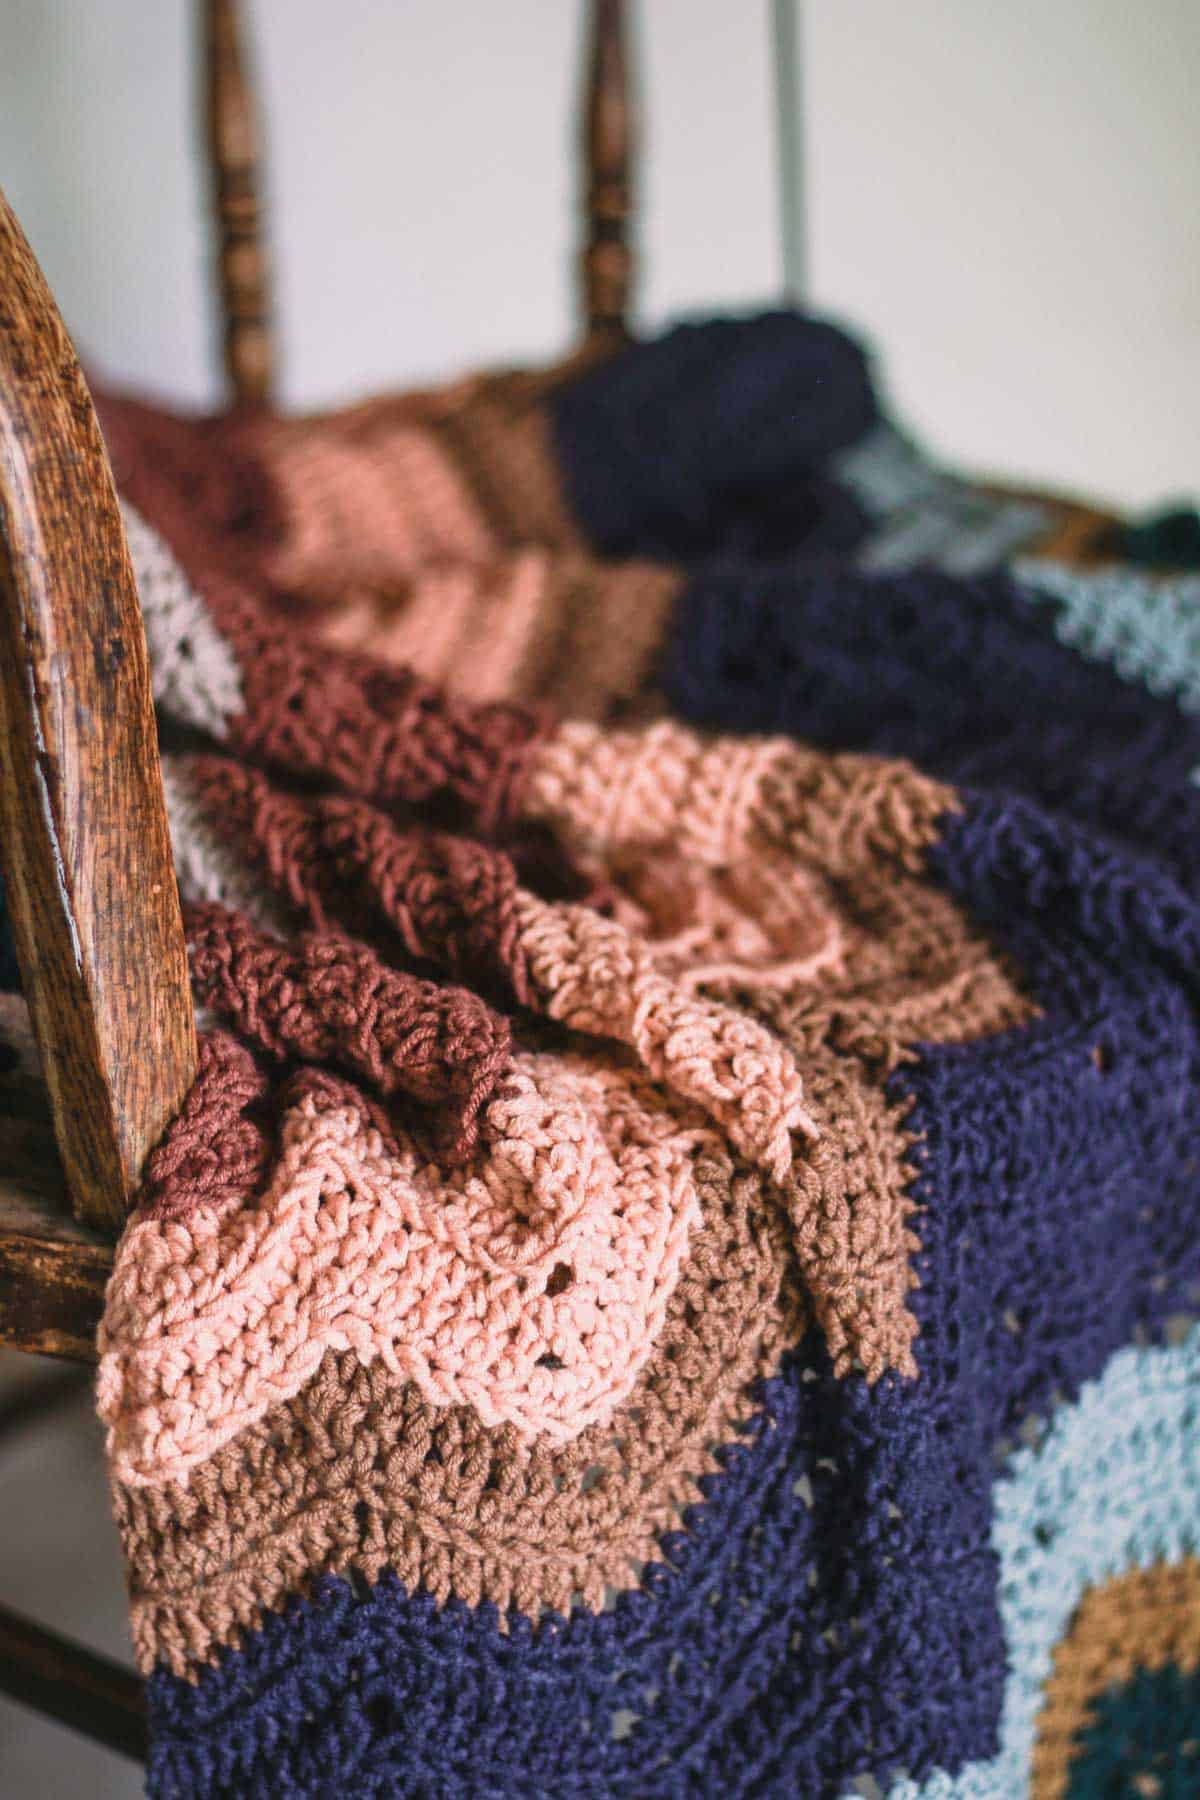 A close up of chevron crochet stitches.